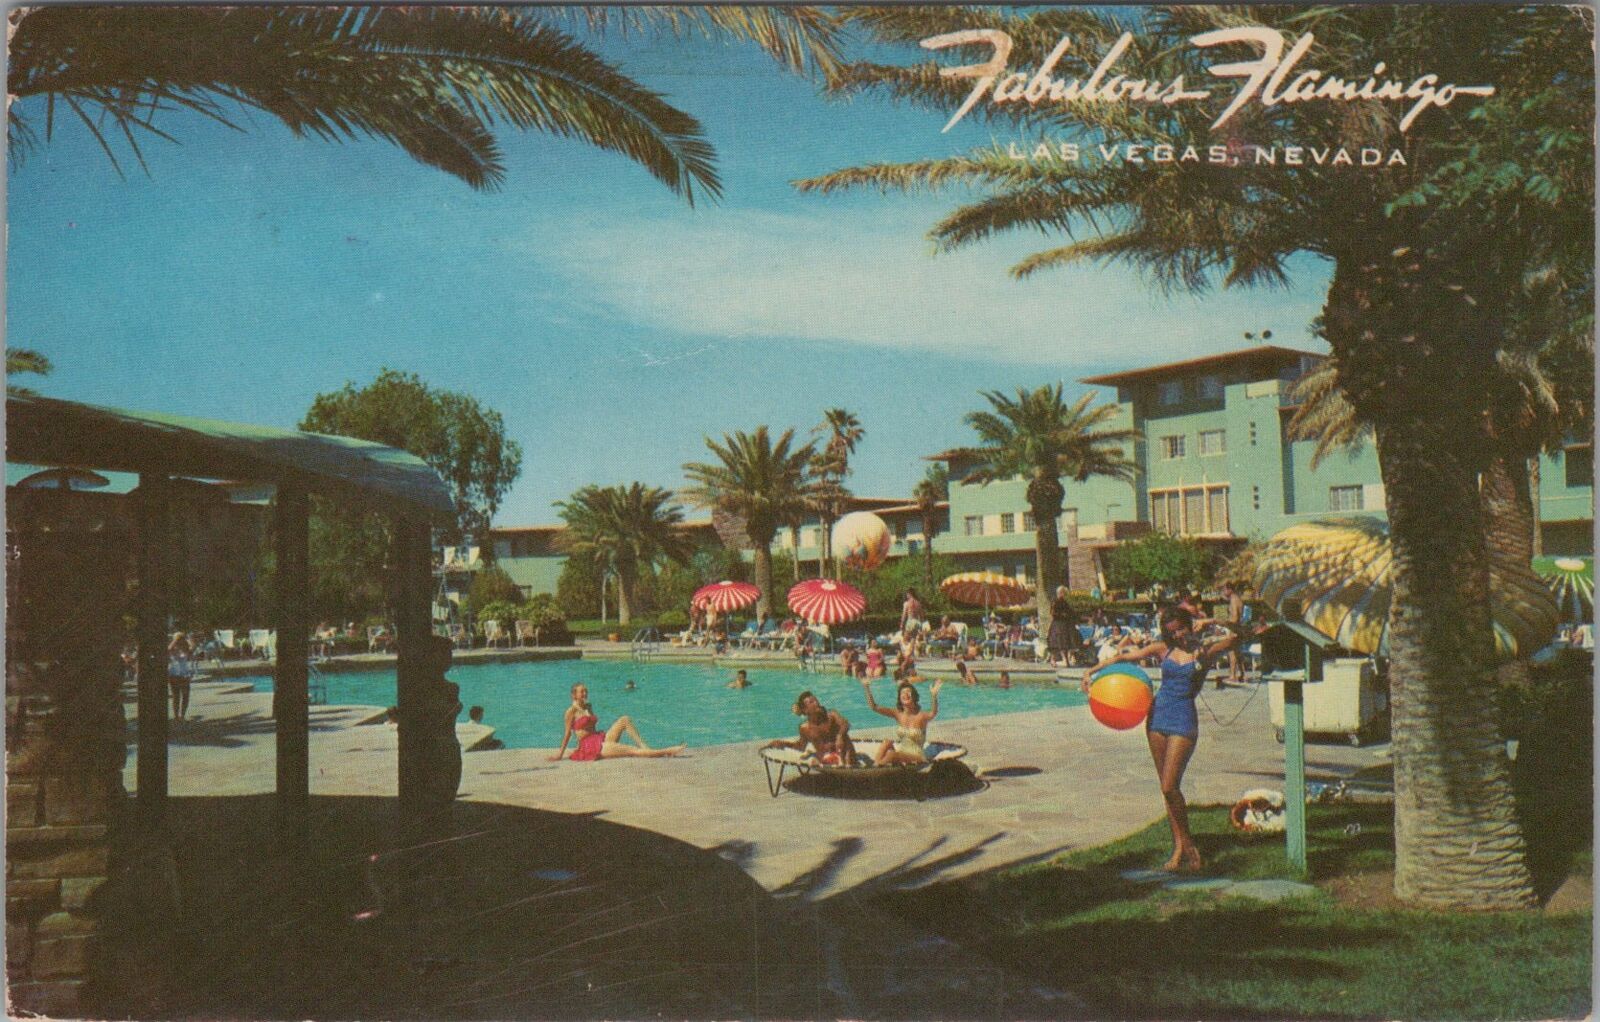 Postcard Fabulous Flamingo Las Vegas Nevada NV 1967